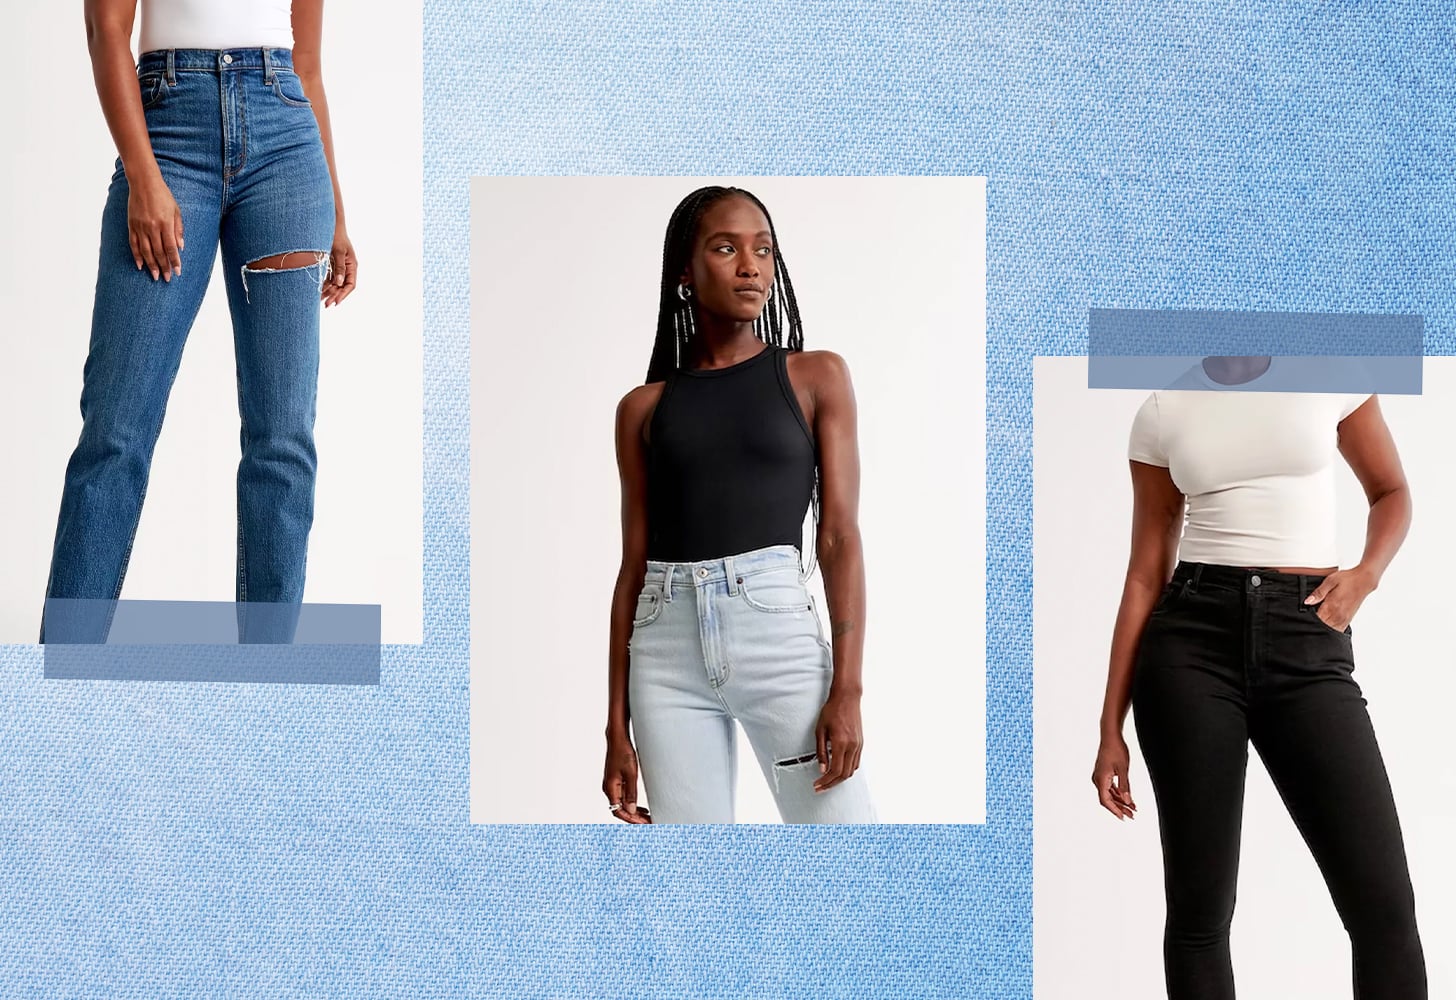 Best Skinny Girl Jeans - Skinny Jeans for Girls from Abercrombie